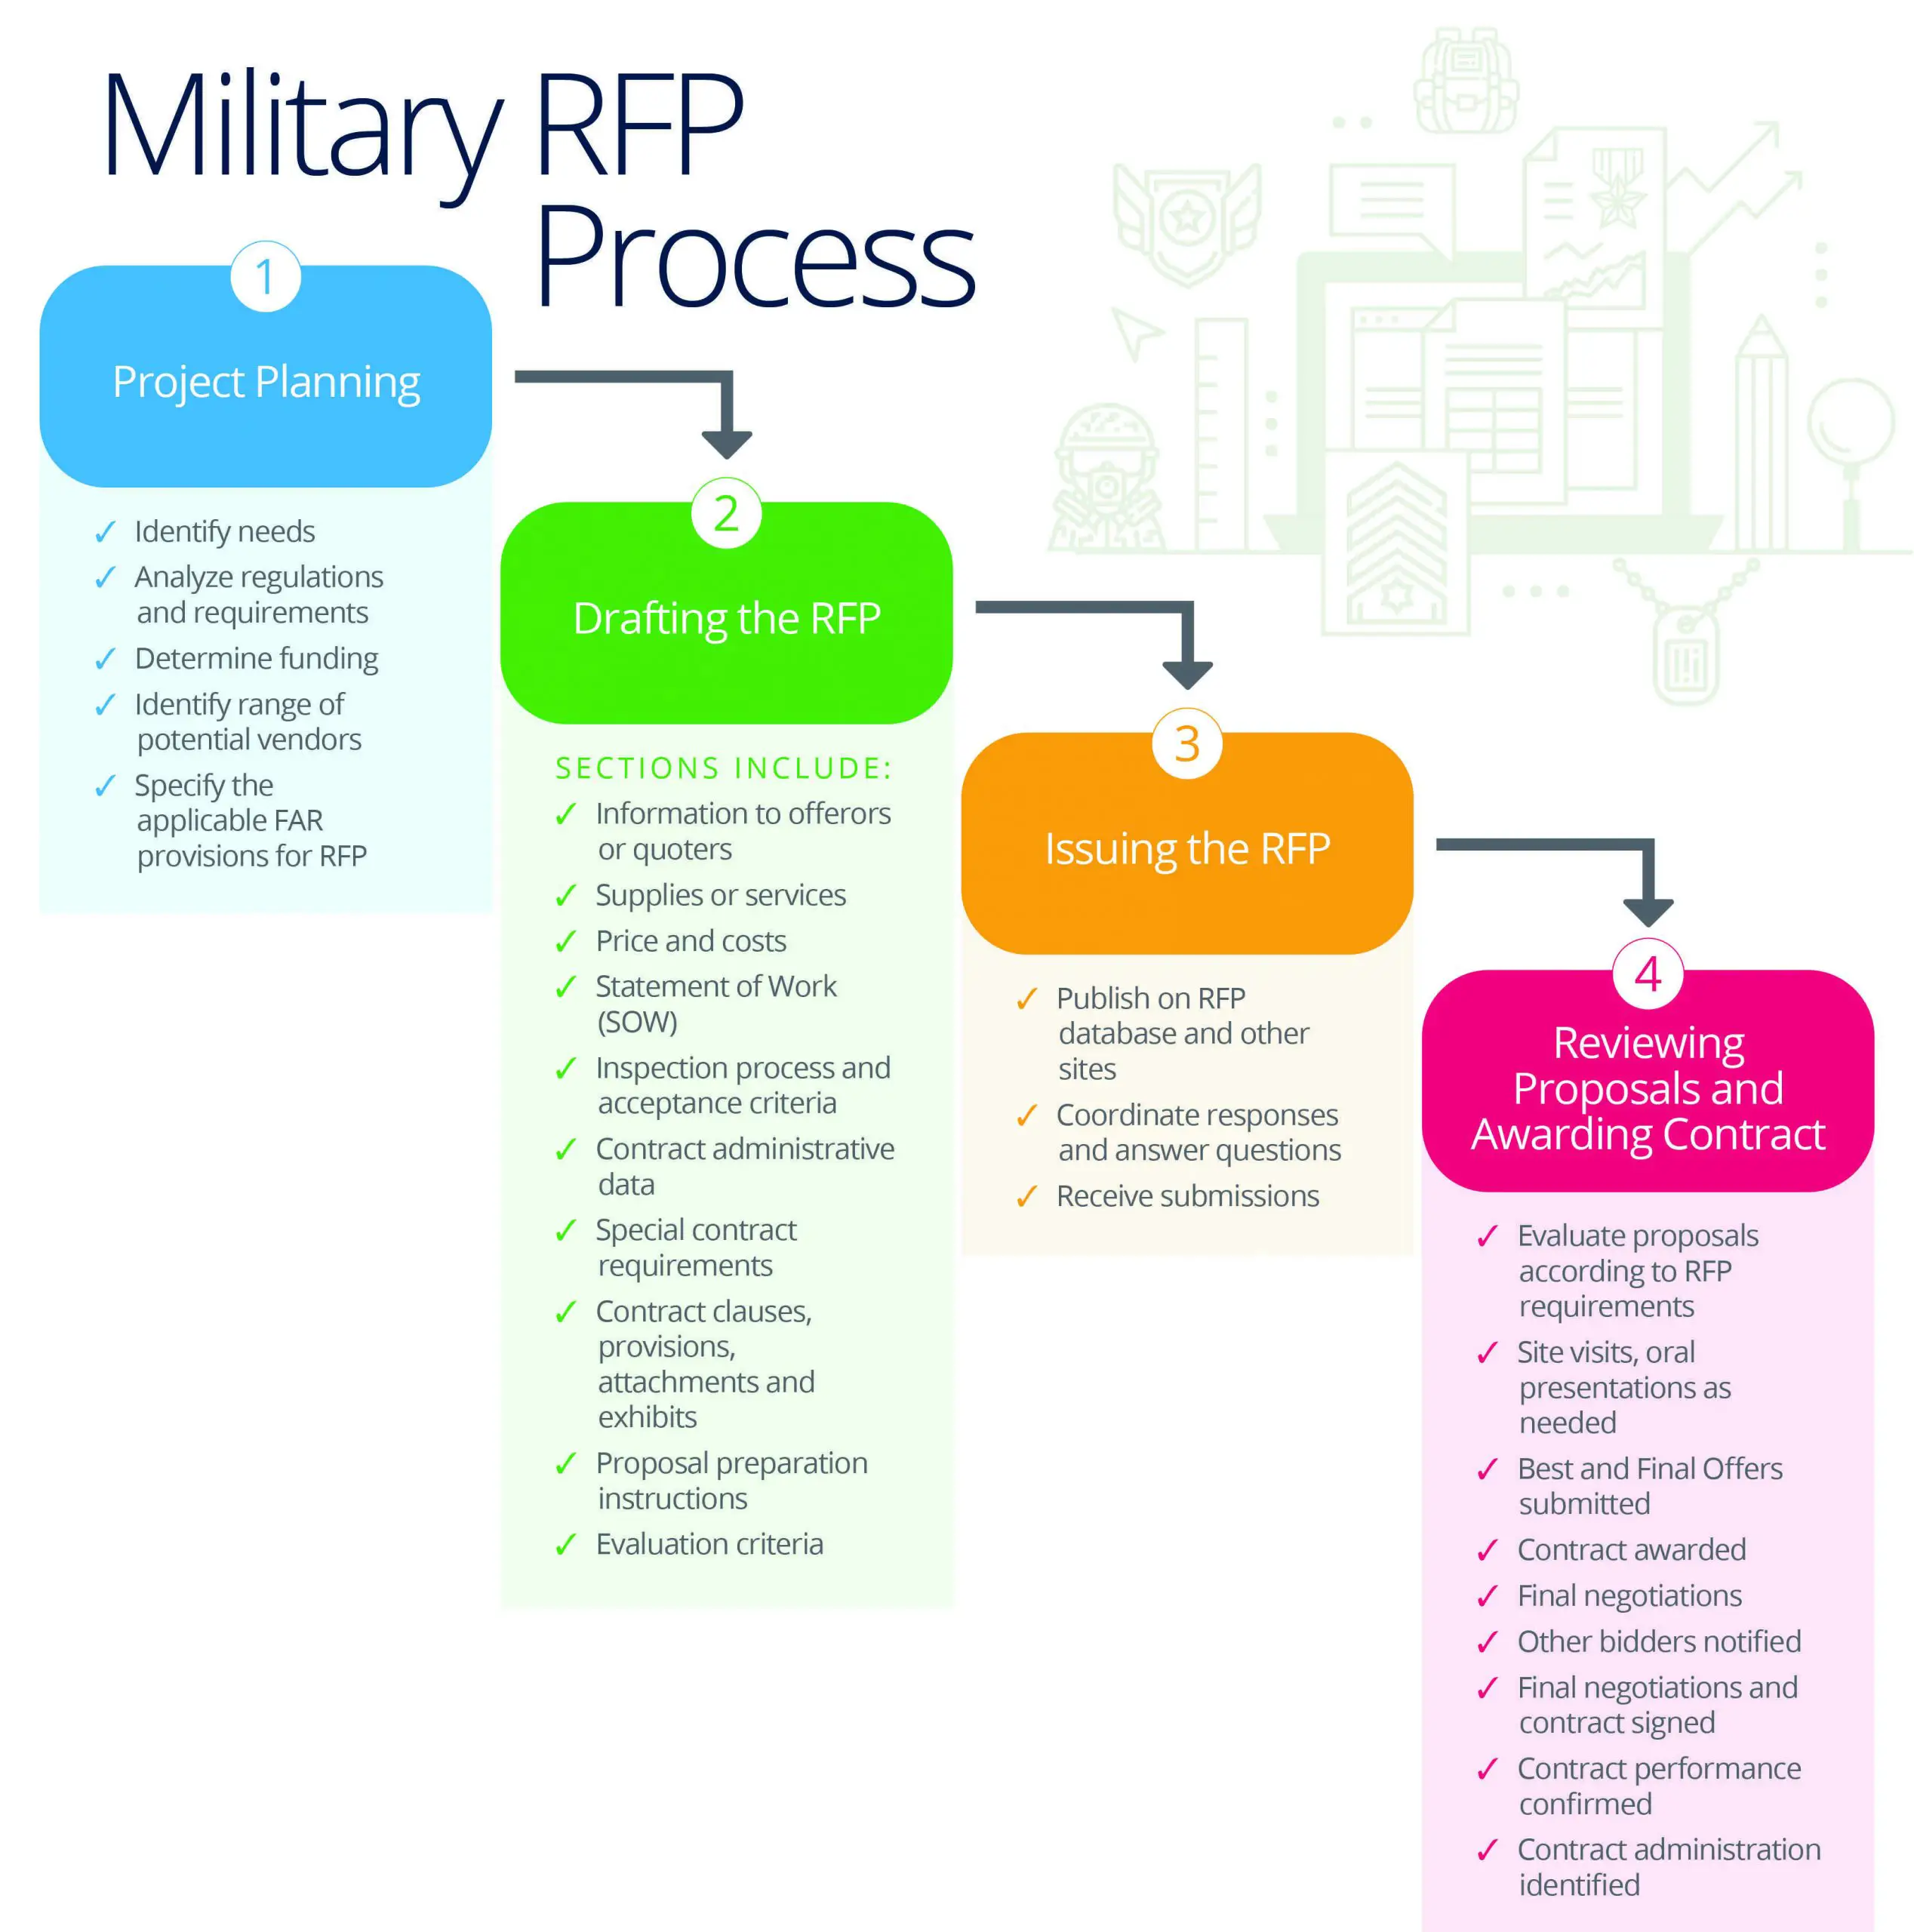 Master Your Companyâs RFP Process